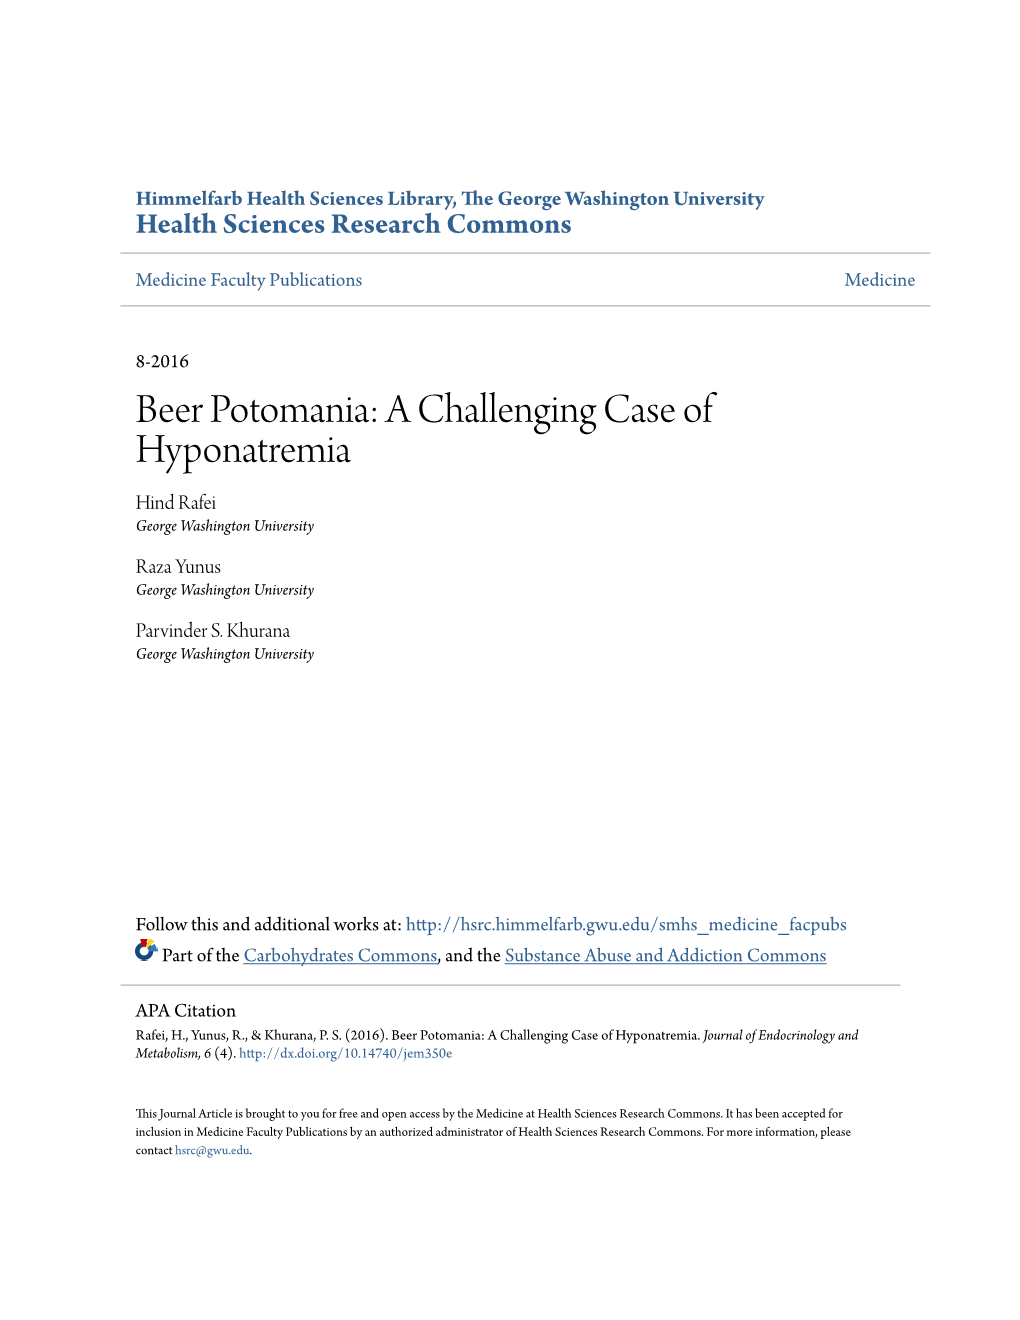 Beer Potomania: a Challenging Case of Hyponatremia Hind Rafei George Washington University